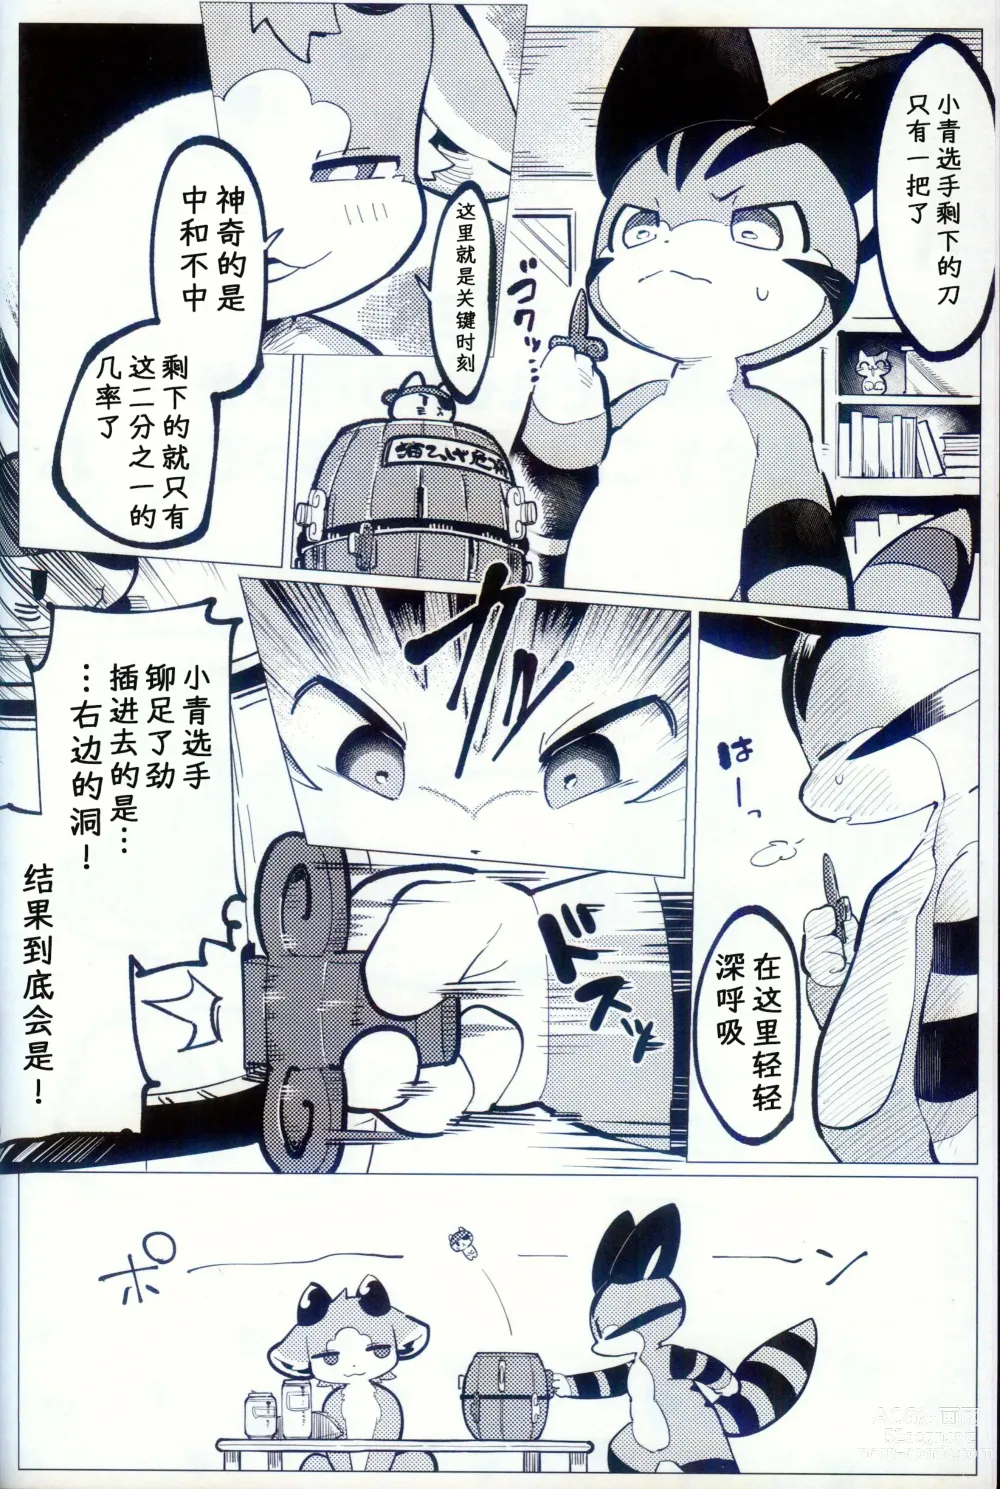 Page 3 of doujinshi 趁着酒劲